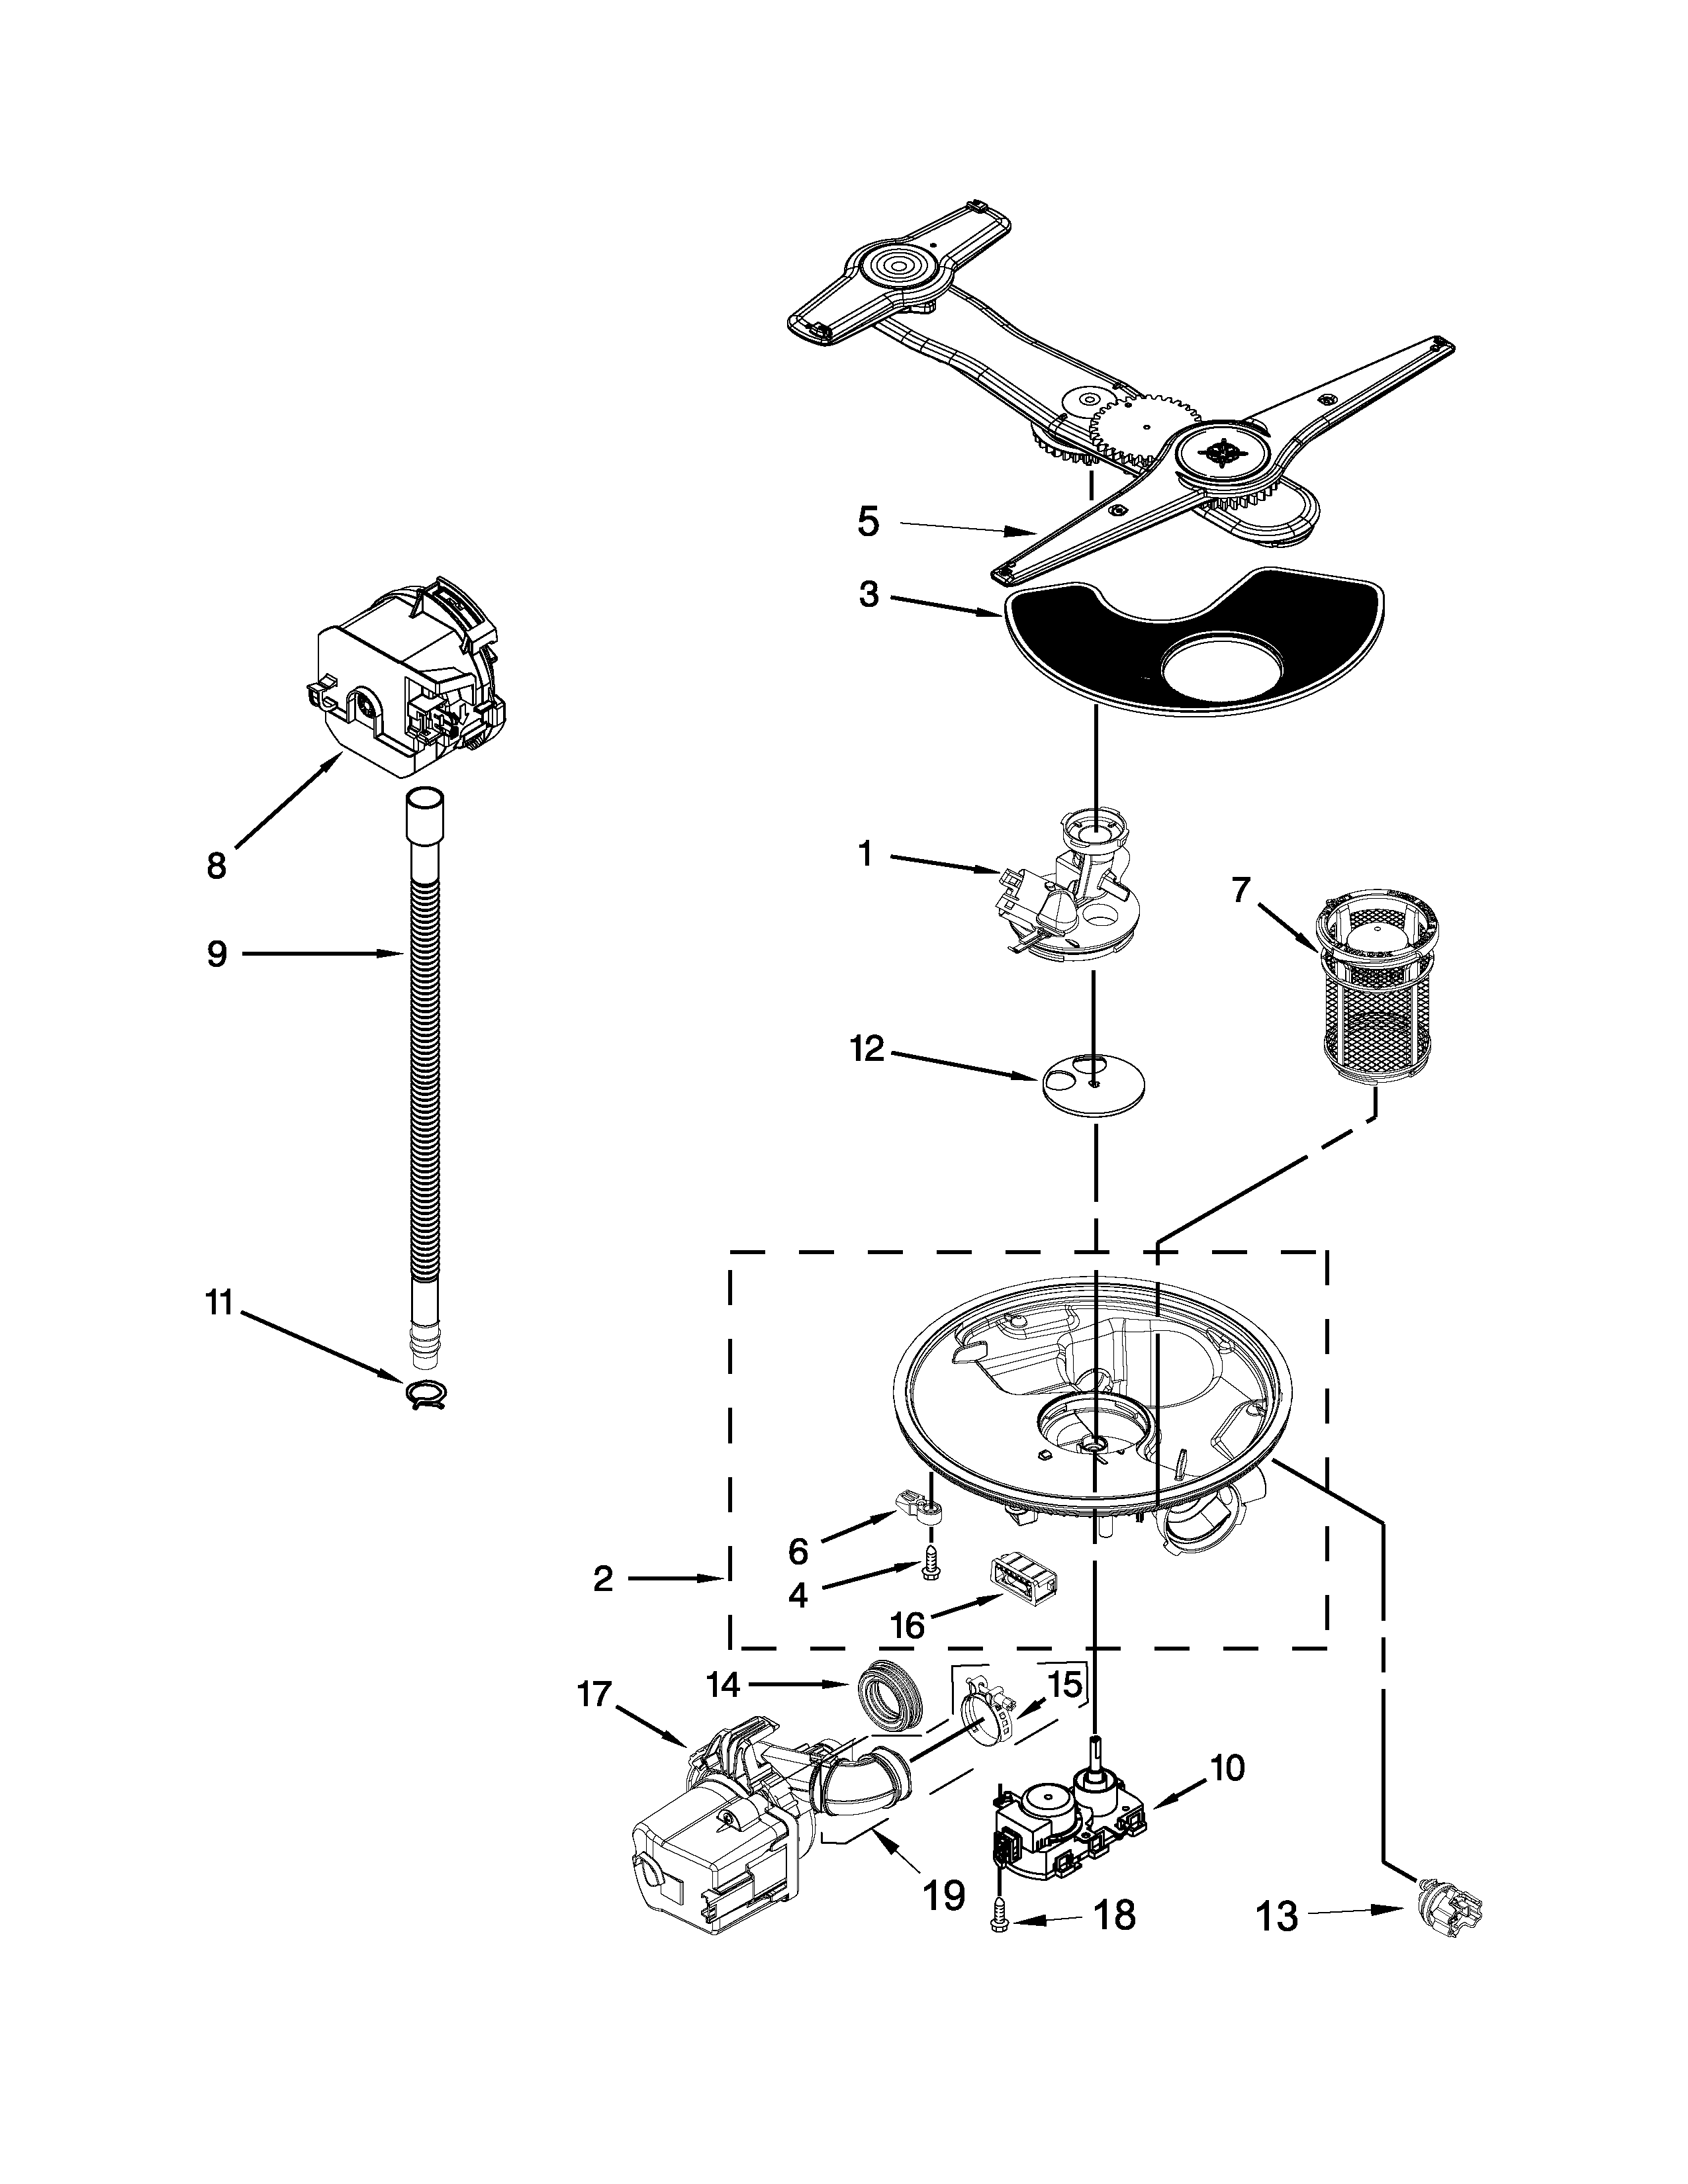 kenmore dishwasher model 665 parts diagram